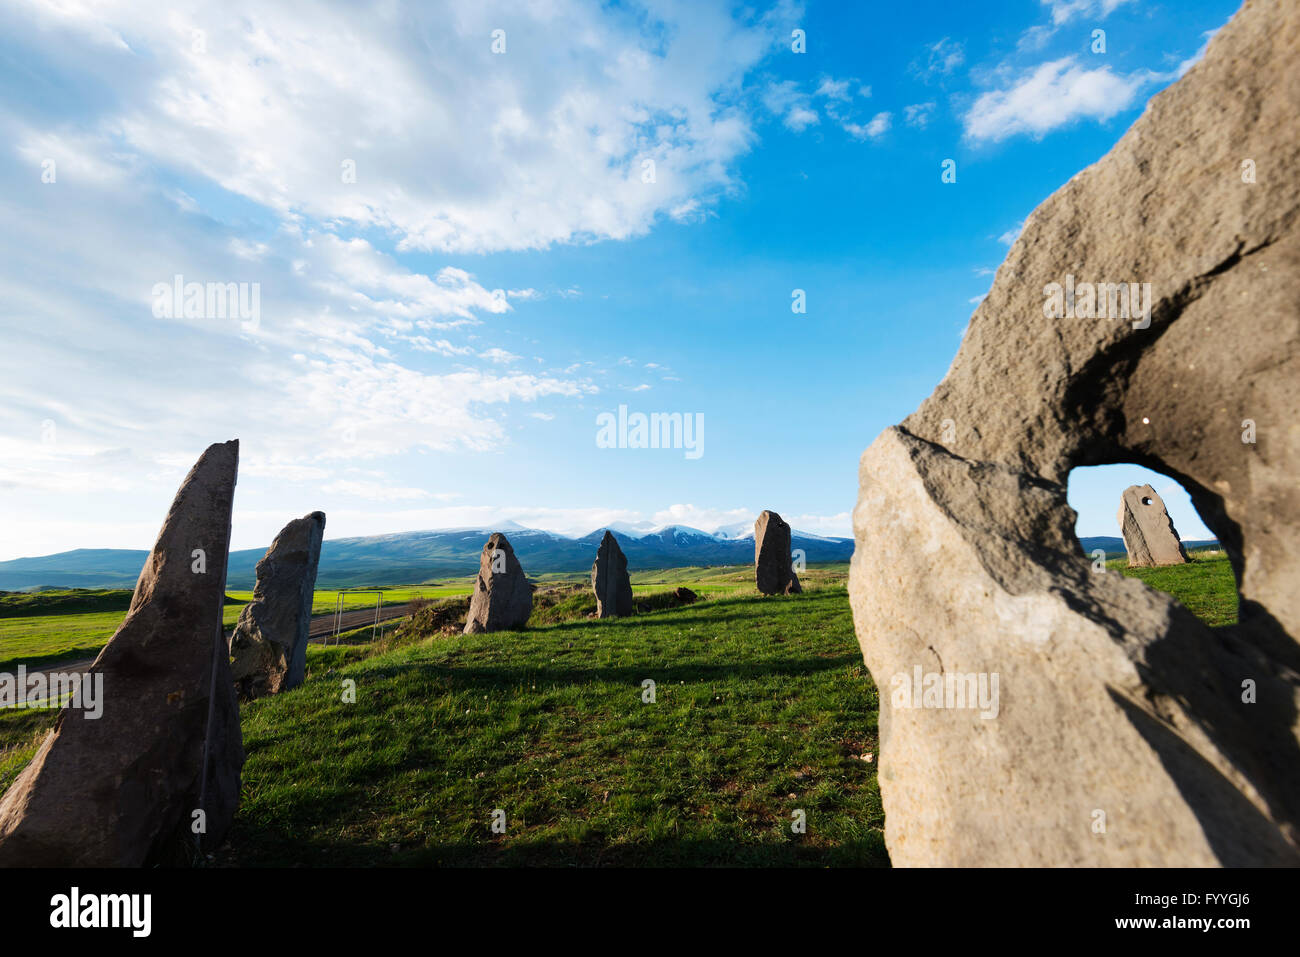 Eurasia, la regione del Caucaso meridionale, Armenia, provincia di Syunik, Karahunj Zorats Karer, archeologico preistorico 'stonehenge' sito Foto Stock